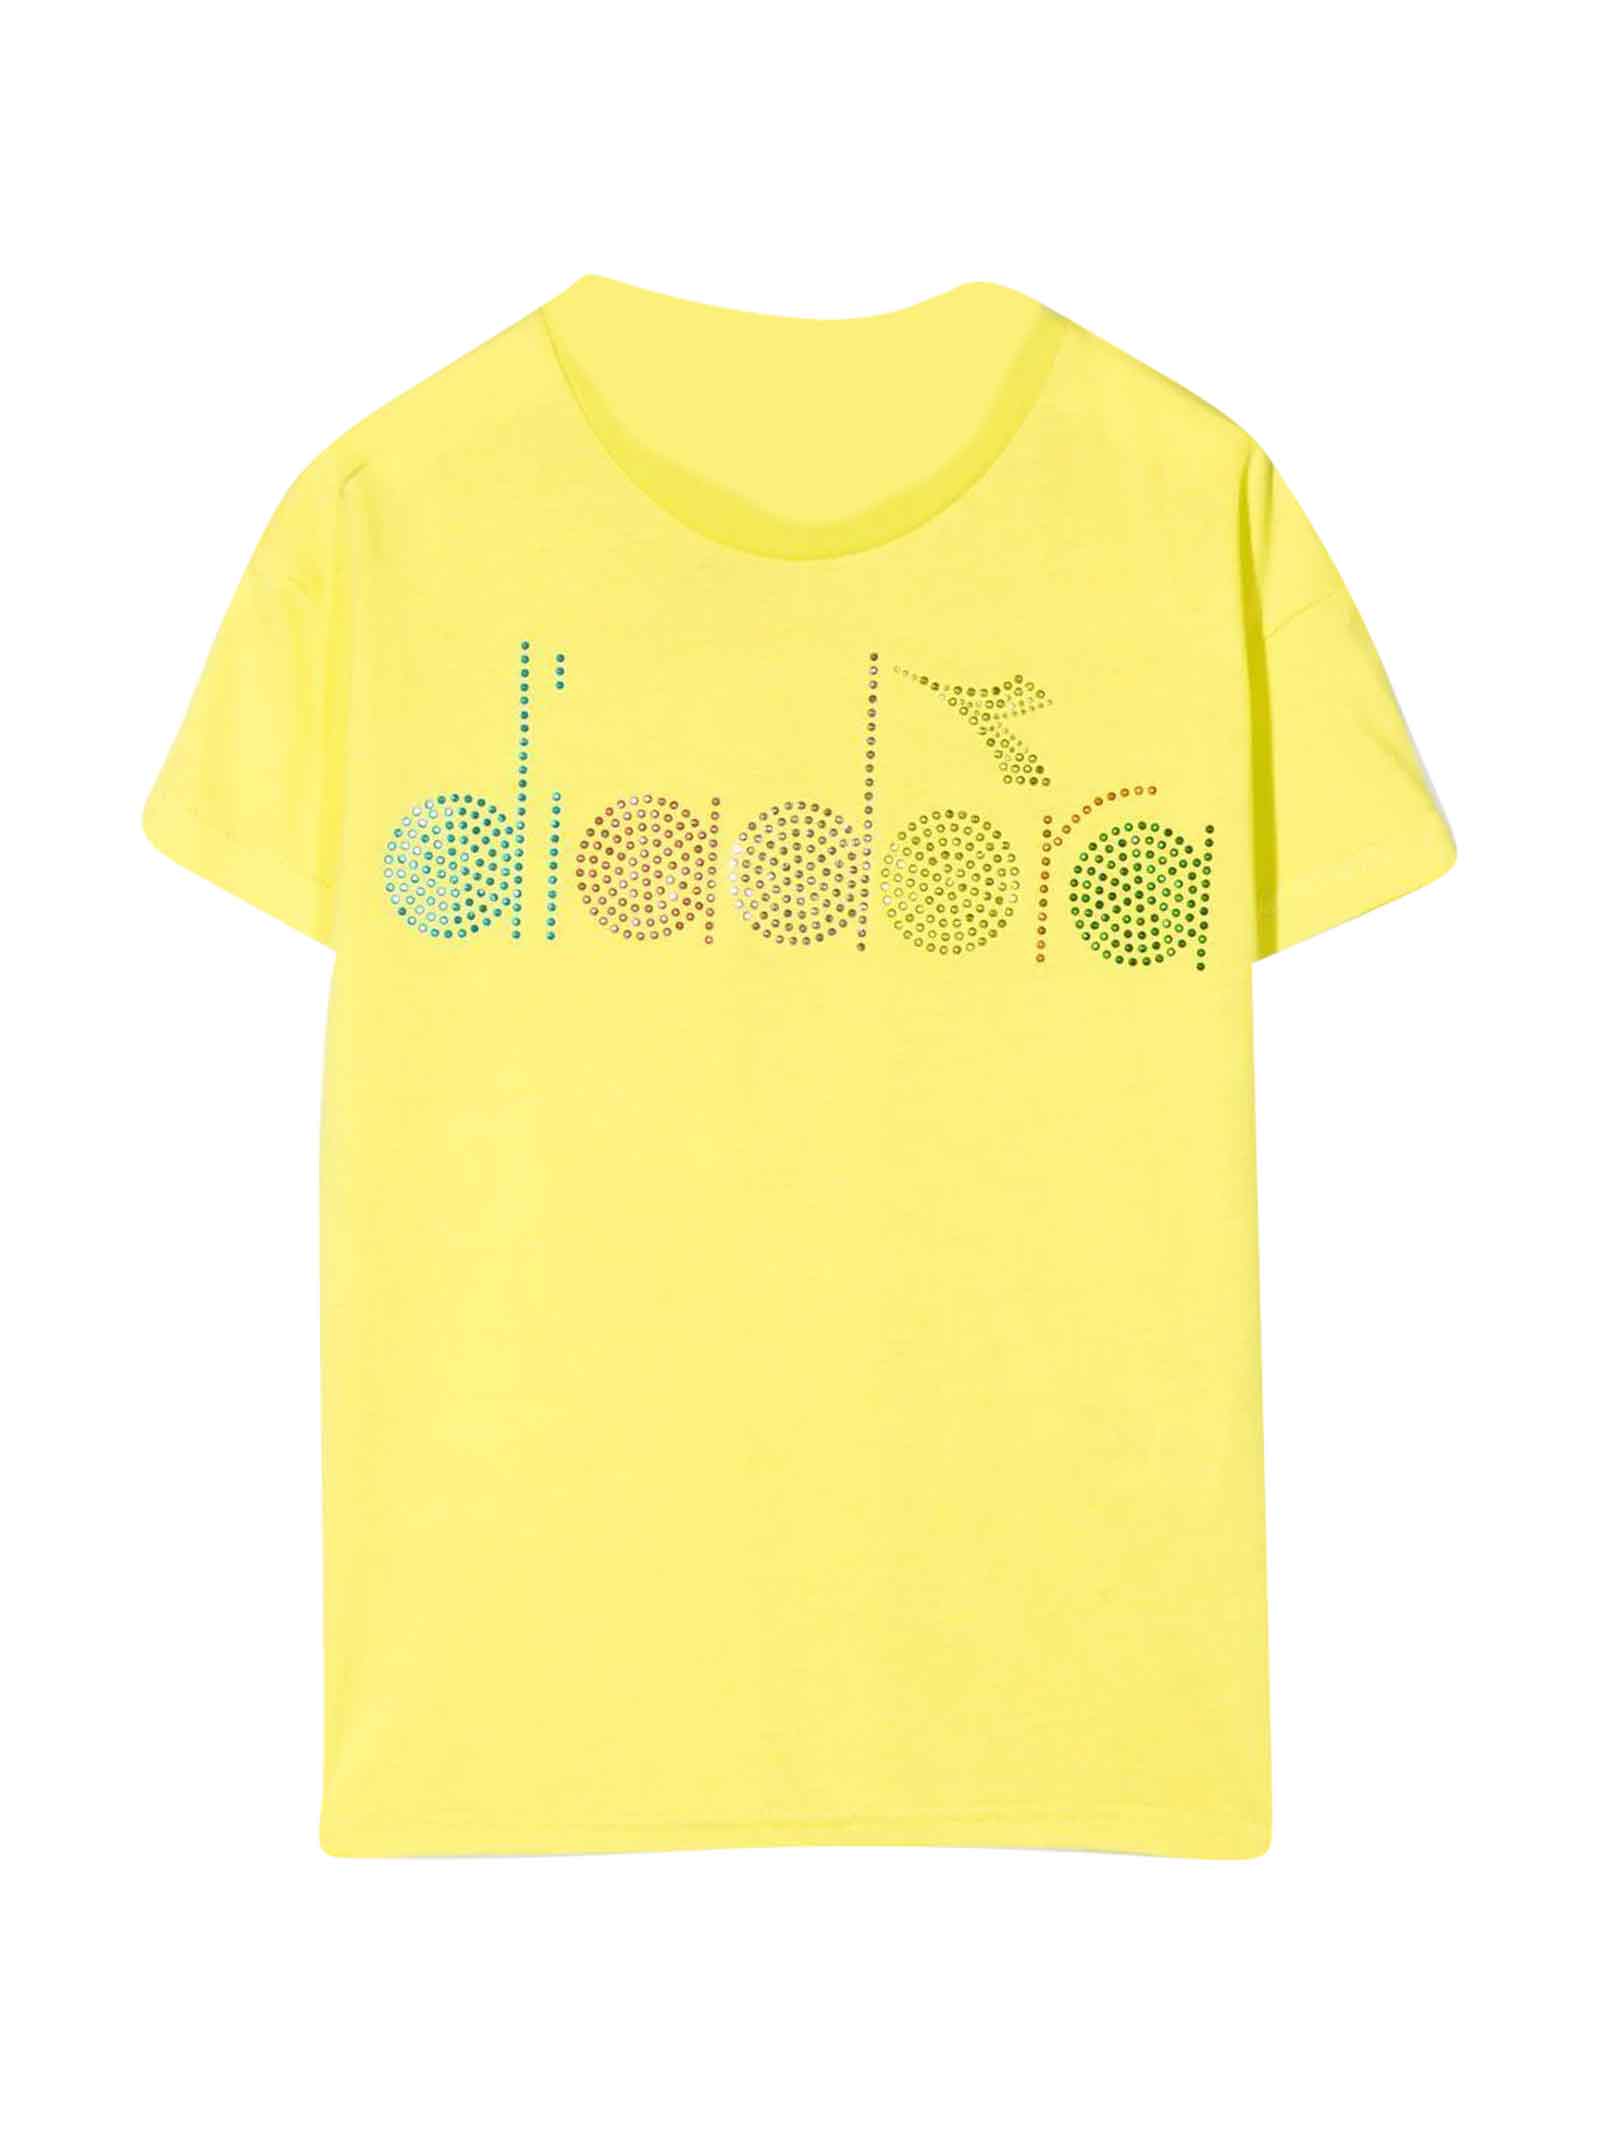 Diadora Lime T-shirt Teen Girl